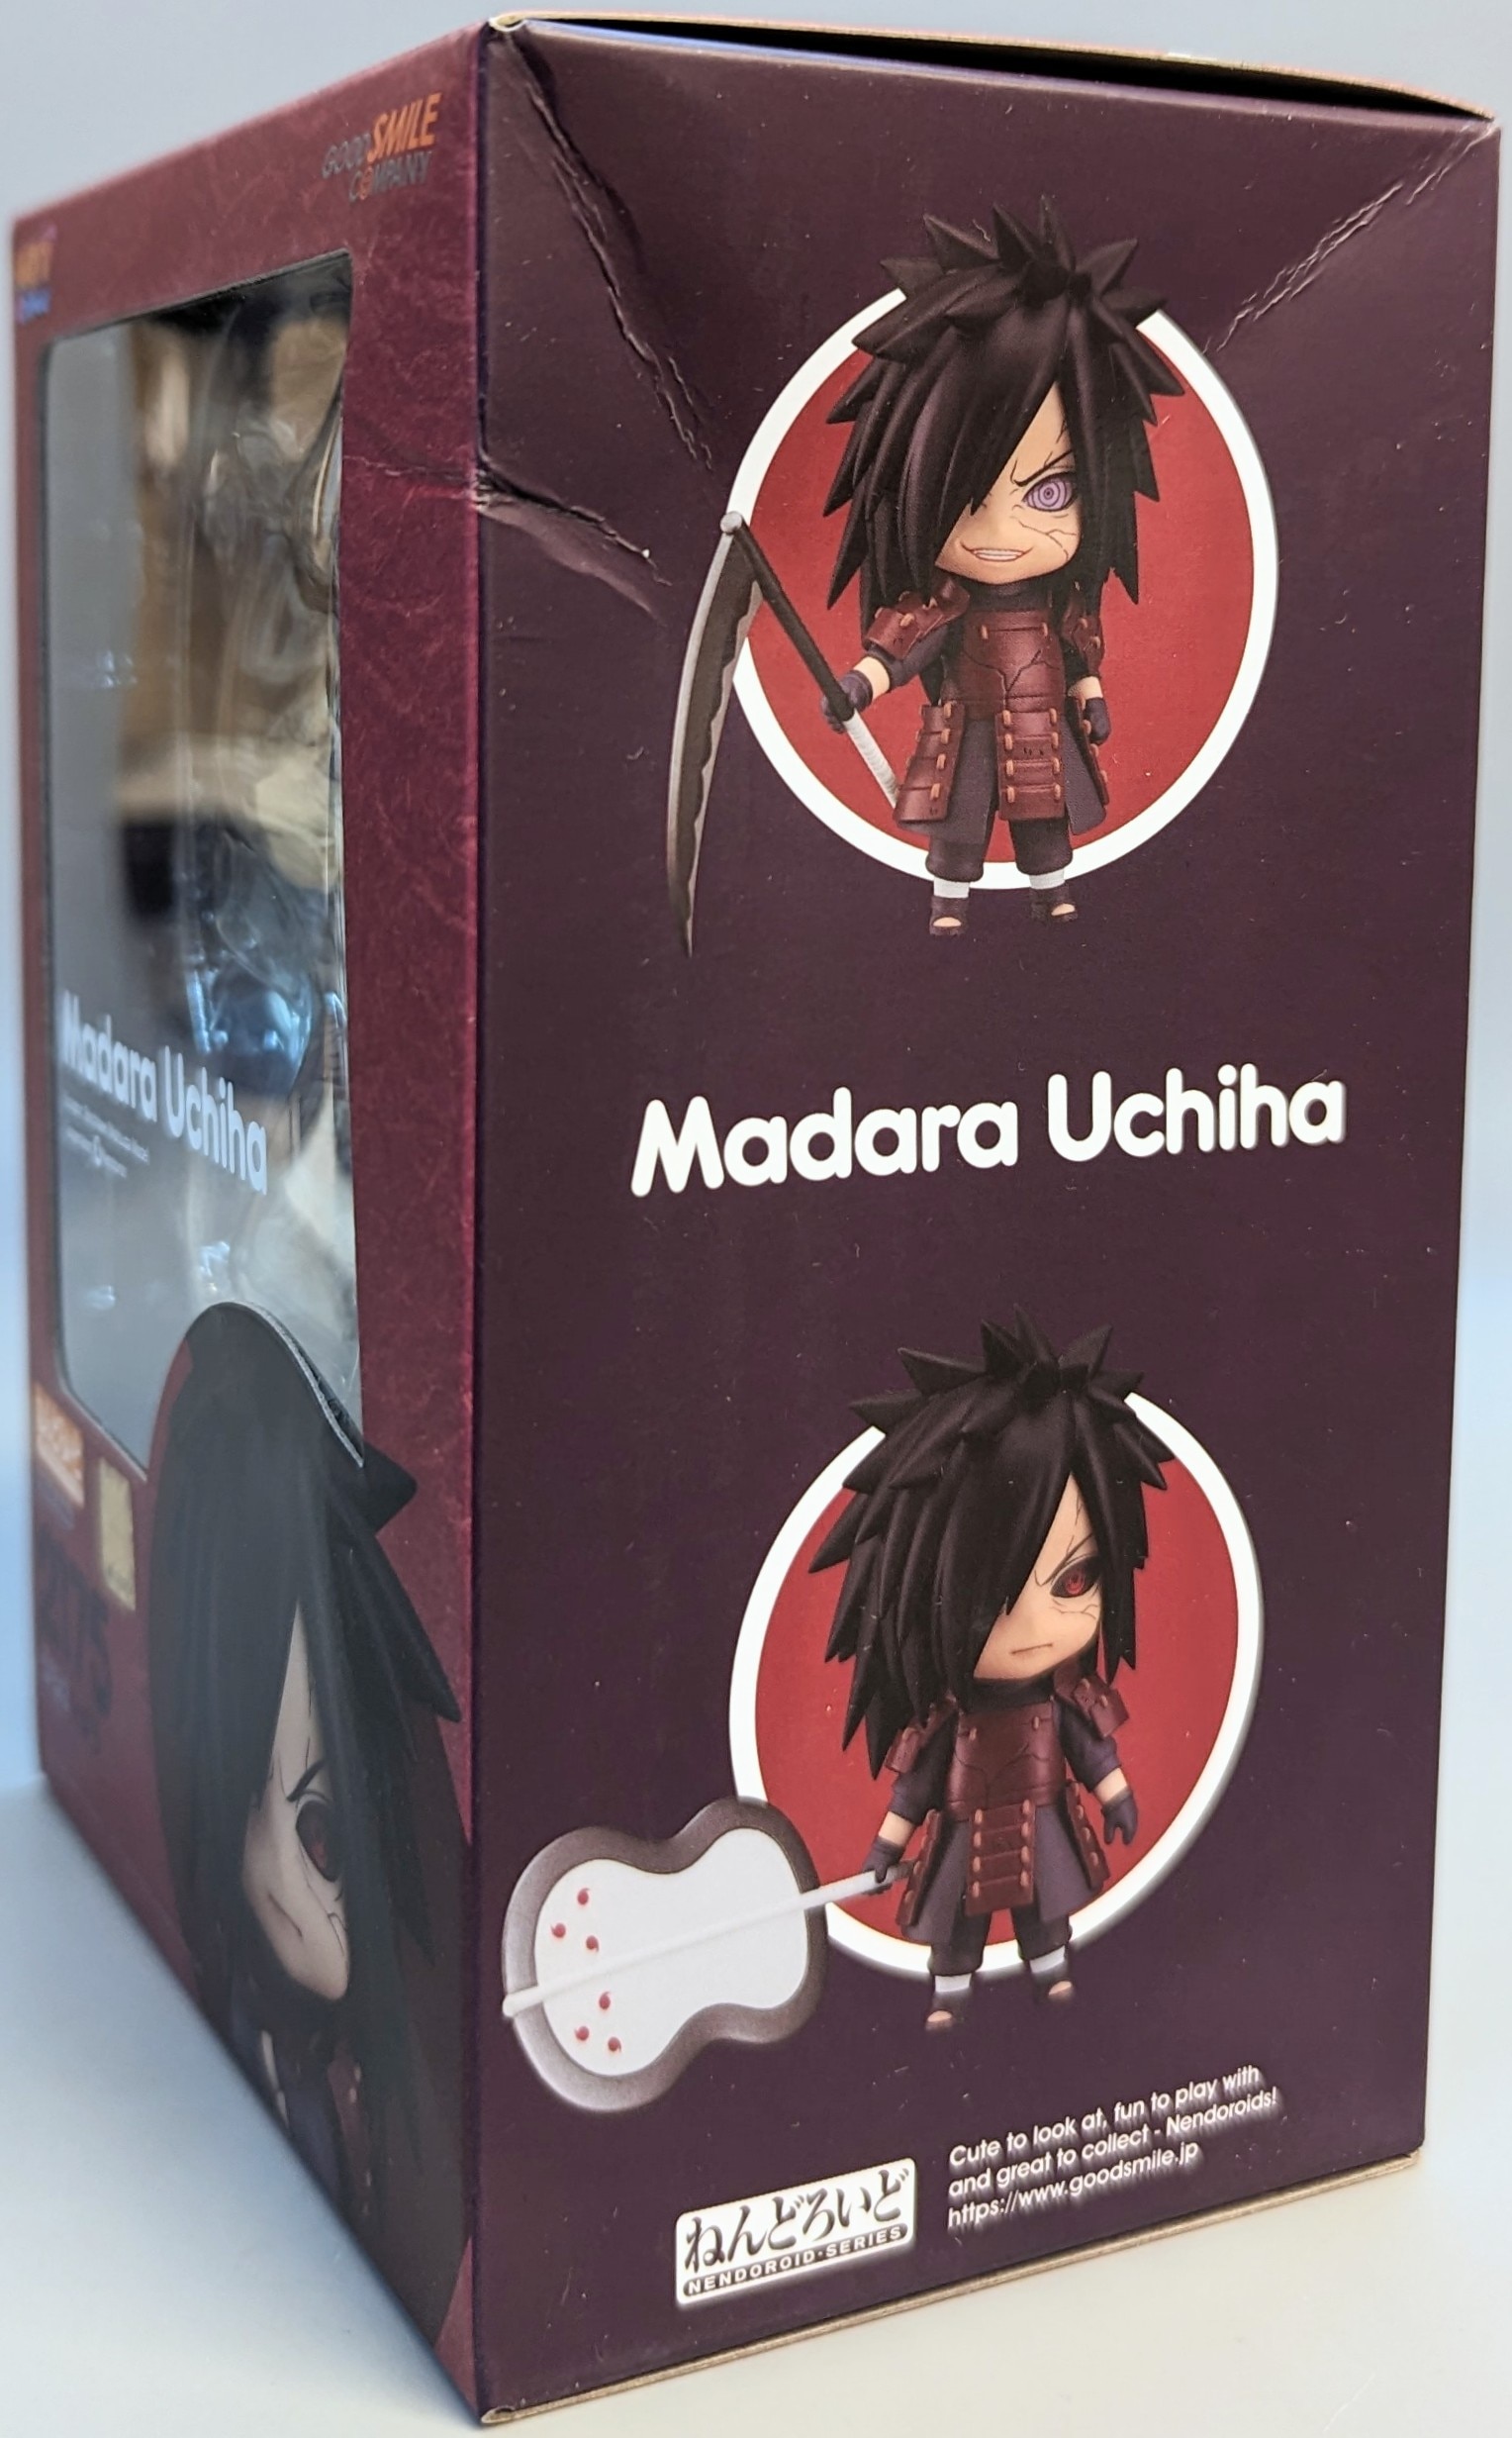 Figurine Madara Uchiwa, Nendoroid - Naruto Shippuden - Good Smile Company